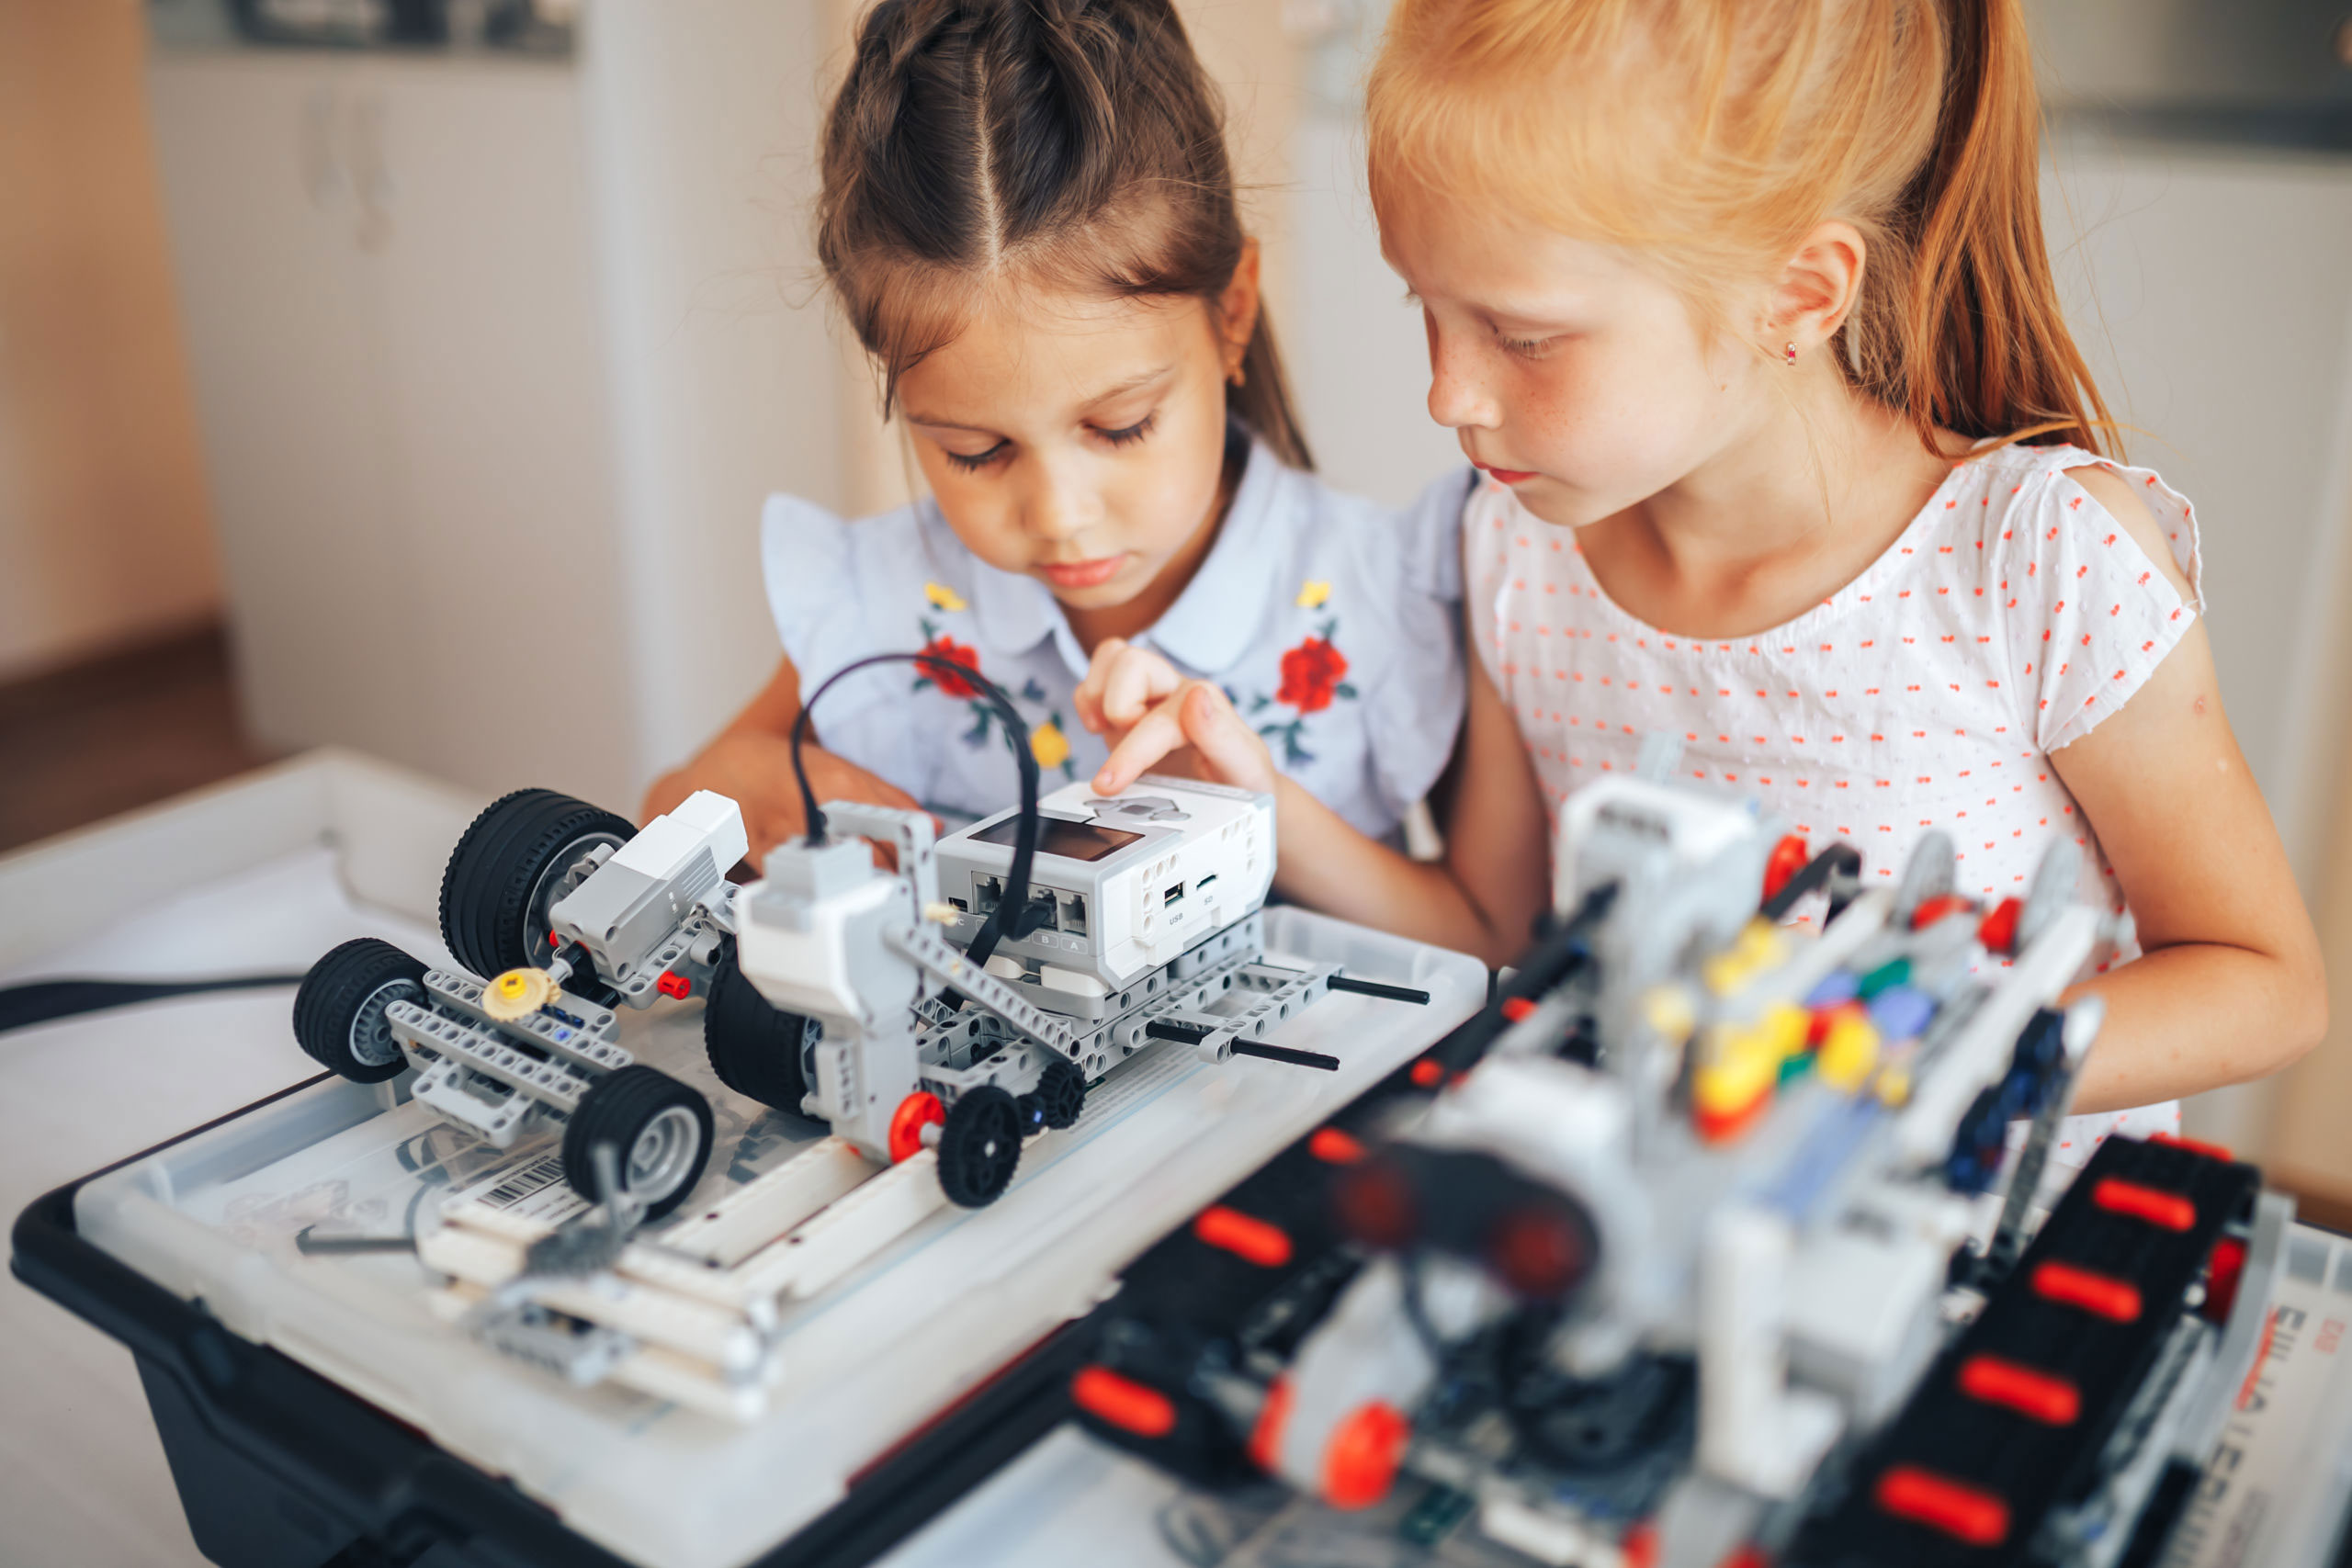 Two schoolgirls study in a robotics class, assemble a robot constructor